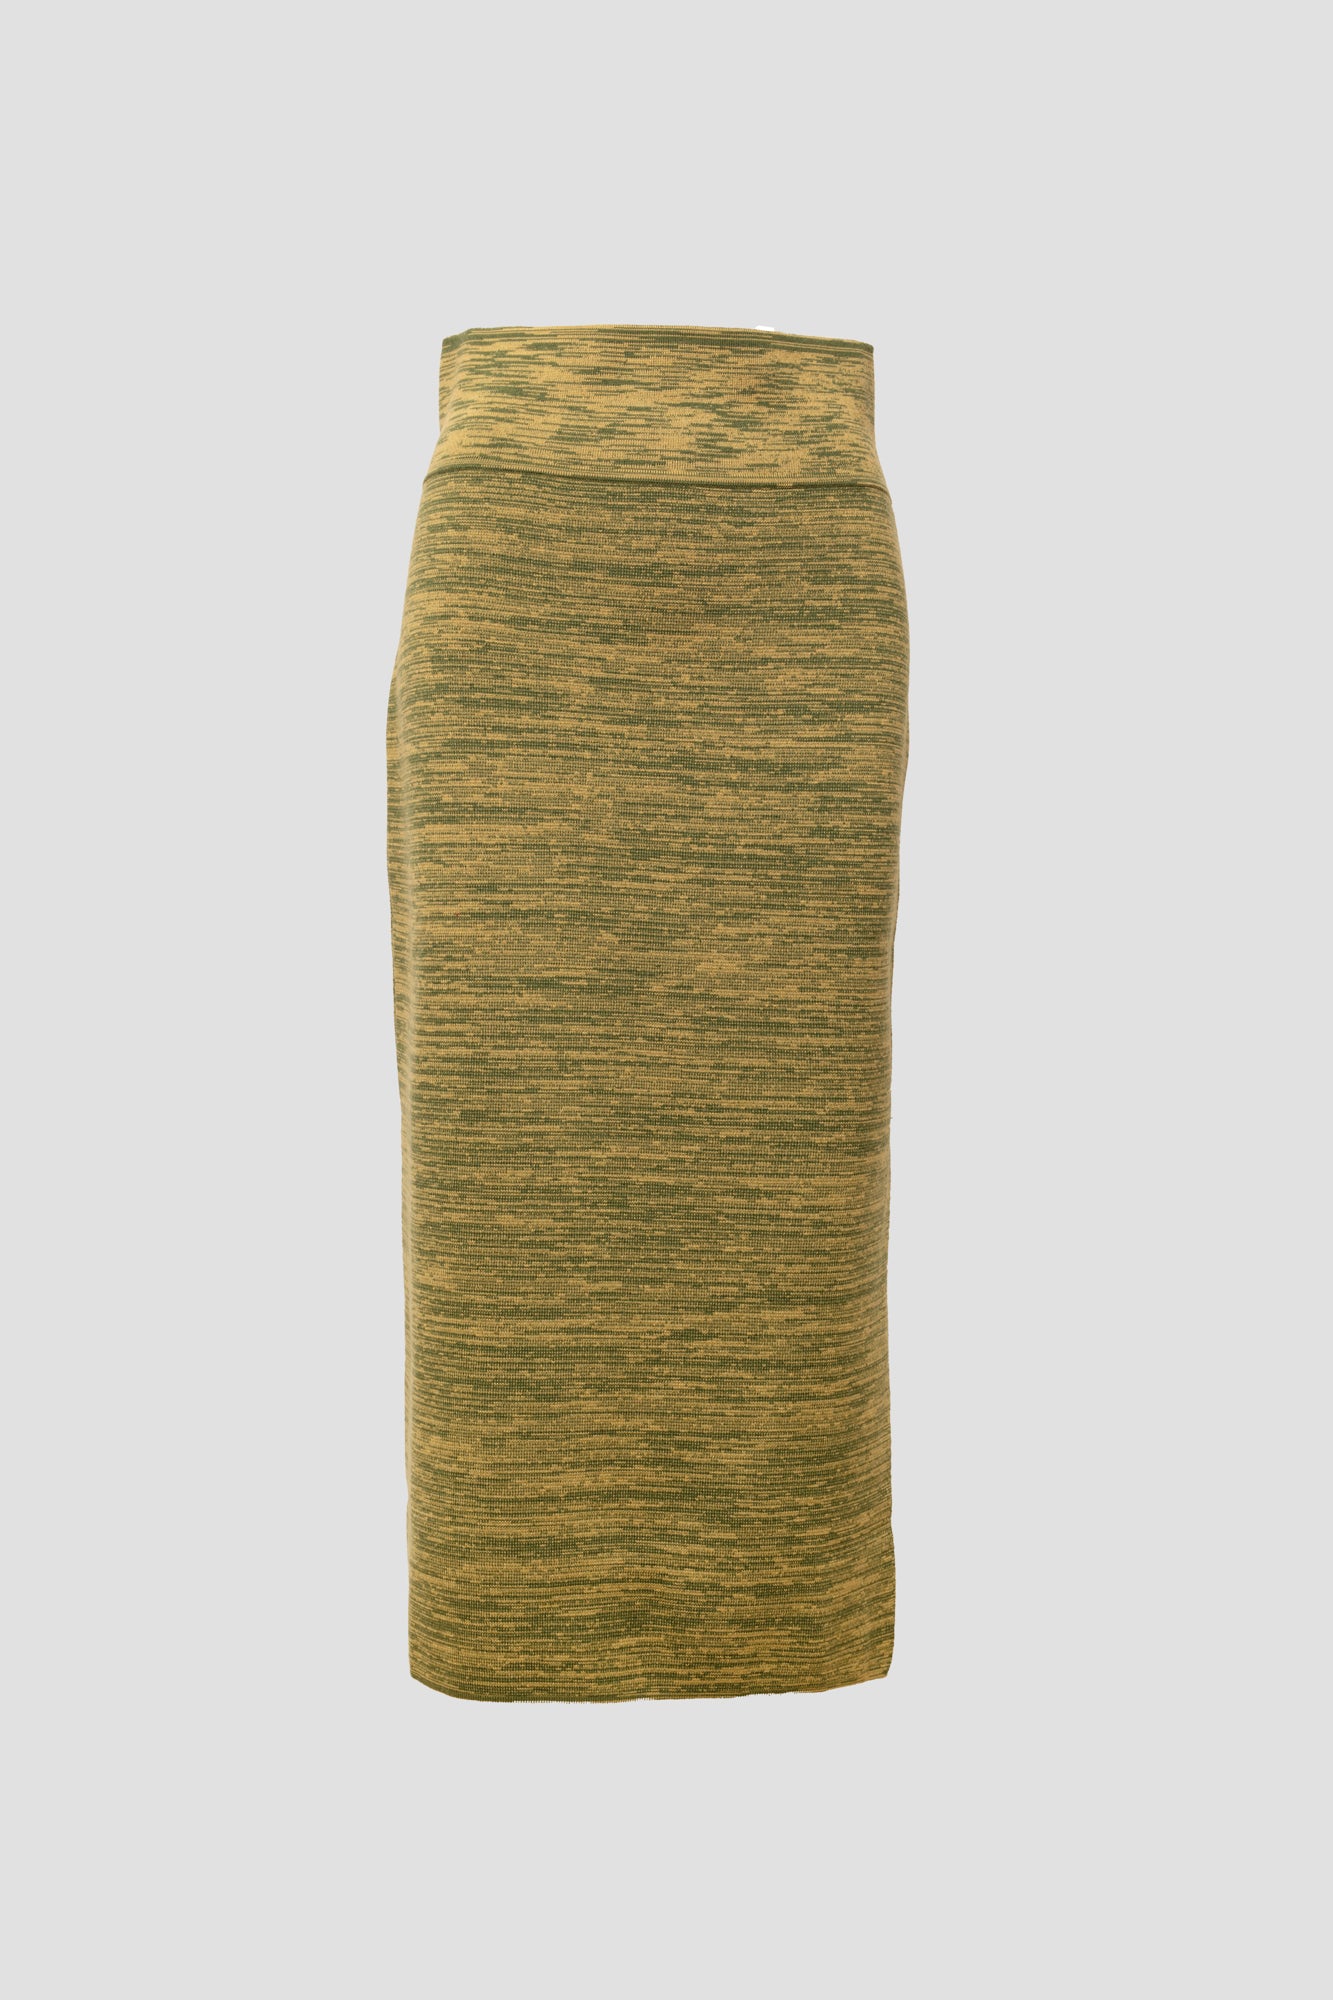 Midi skirt with side slits